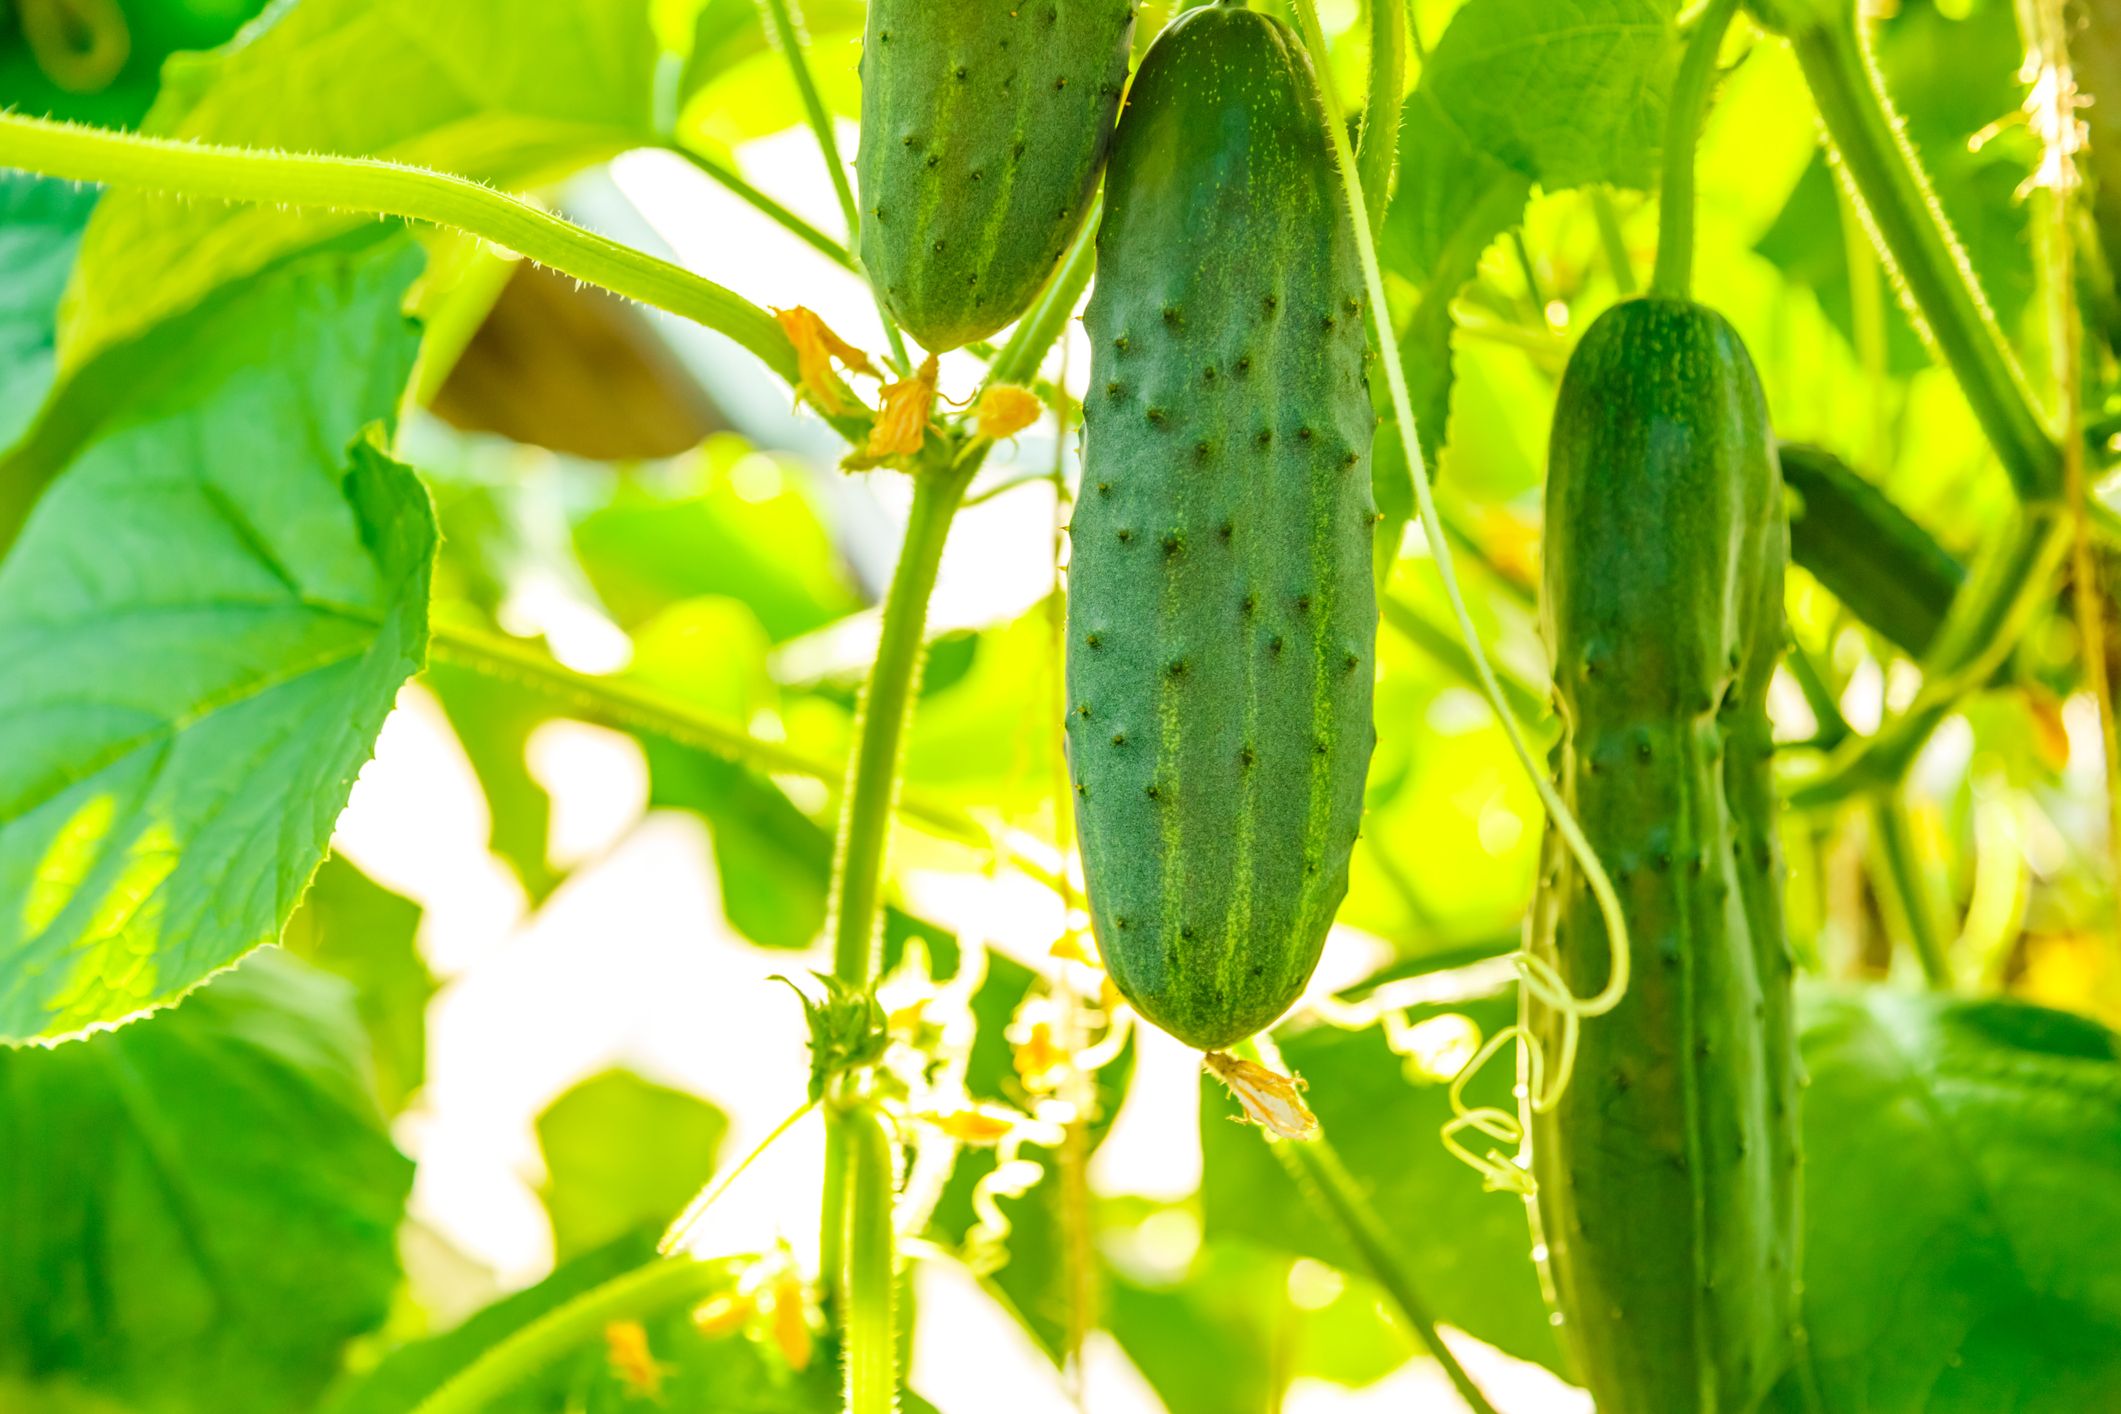 Cucumbers - Planting, Growing, And Harvesting Procedure